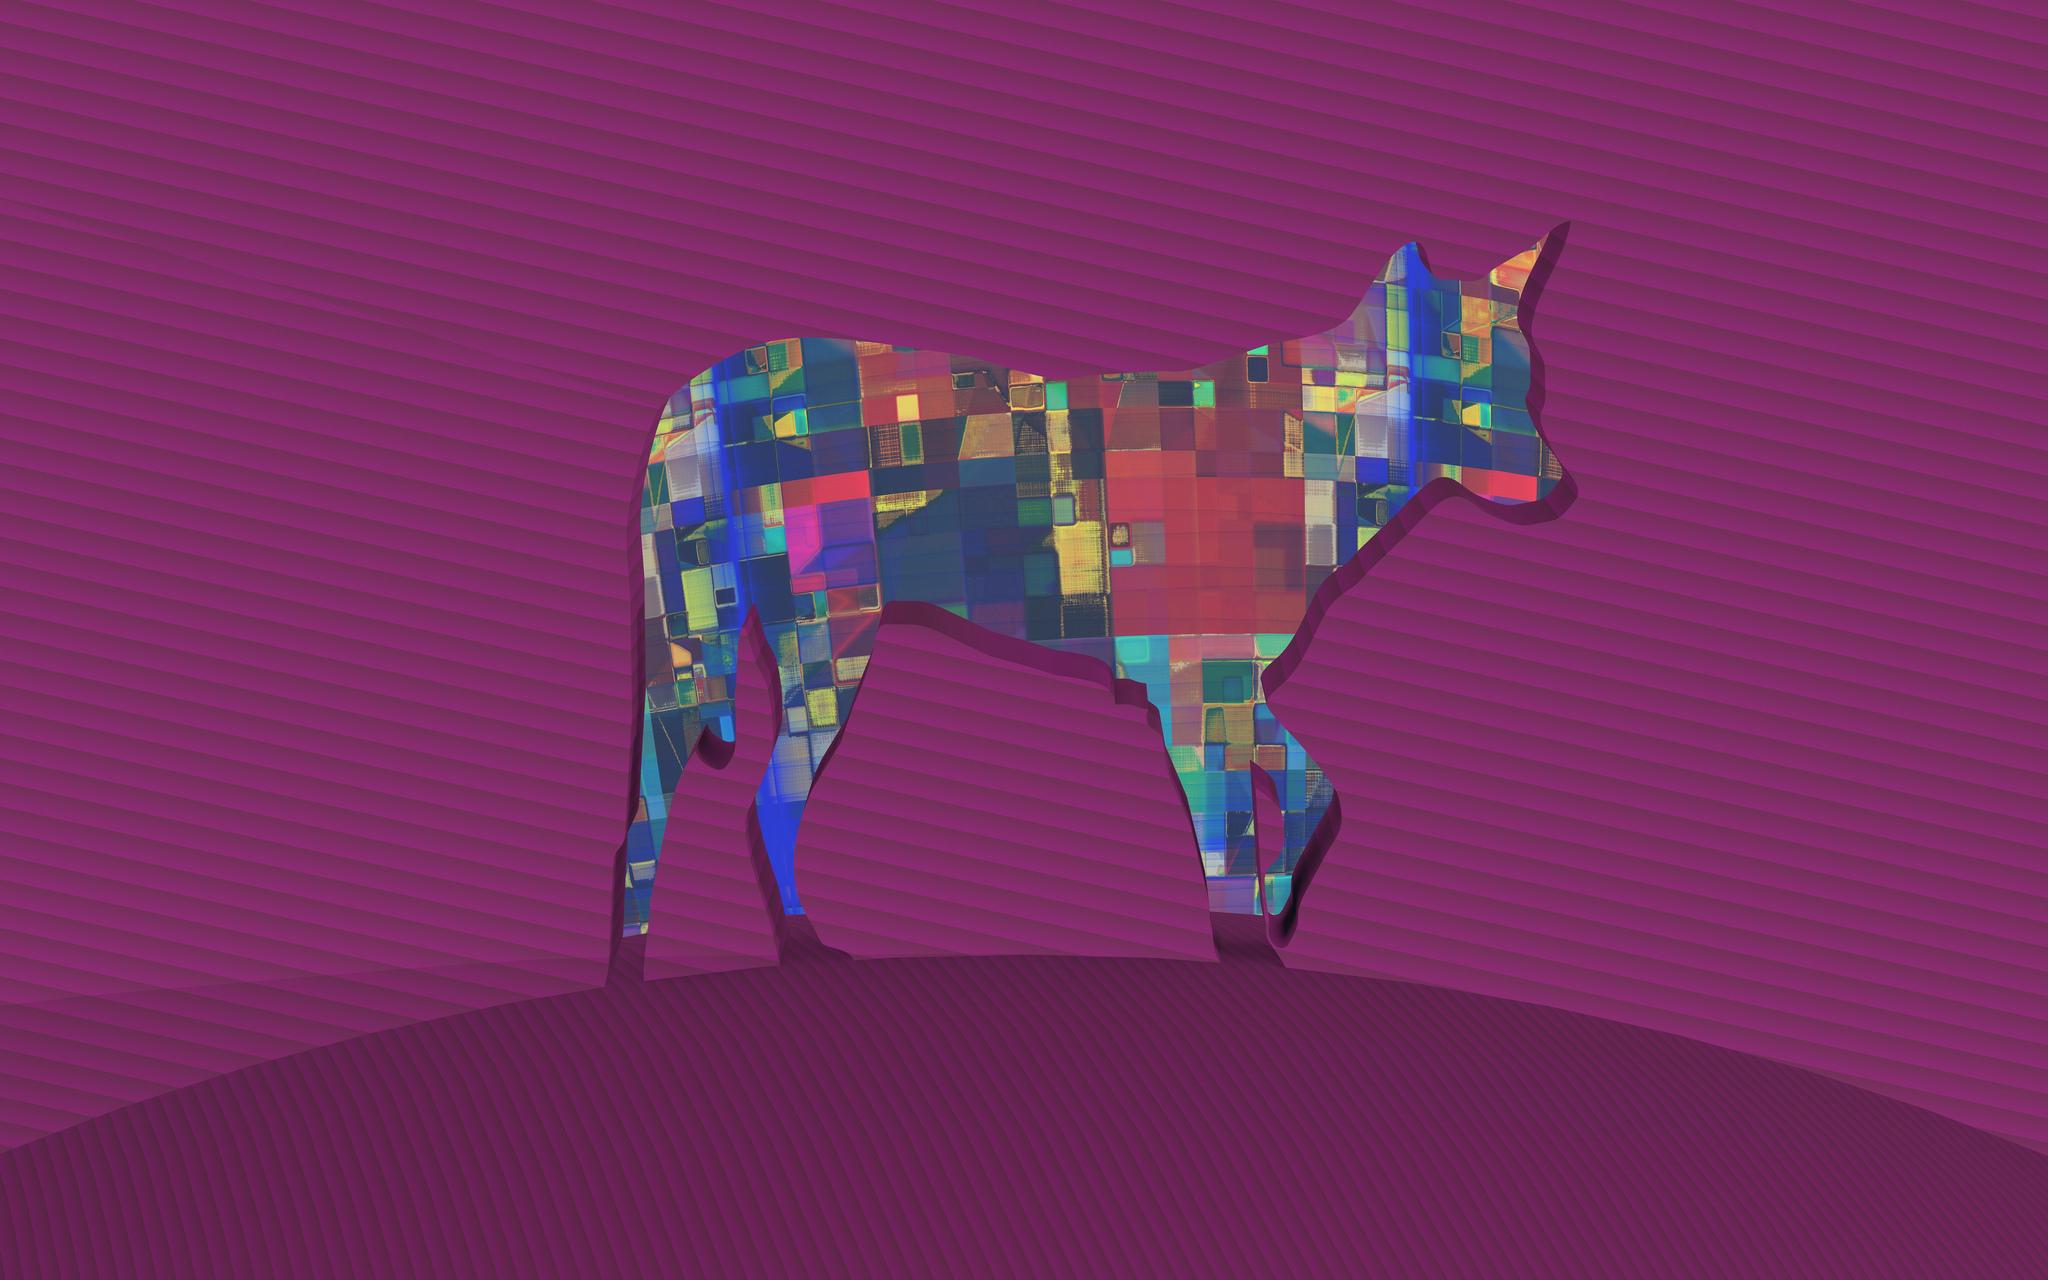 Ubuntu 19.04 Disco Dingo Community Wallpaper Competition